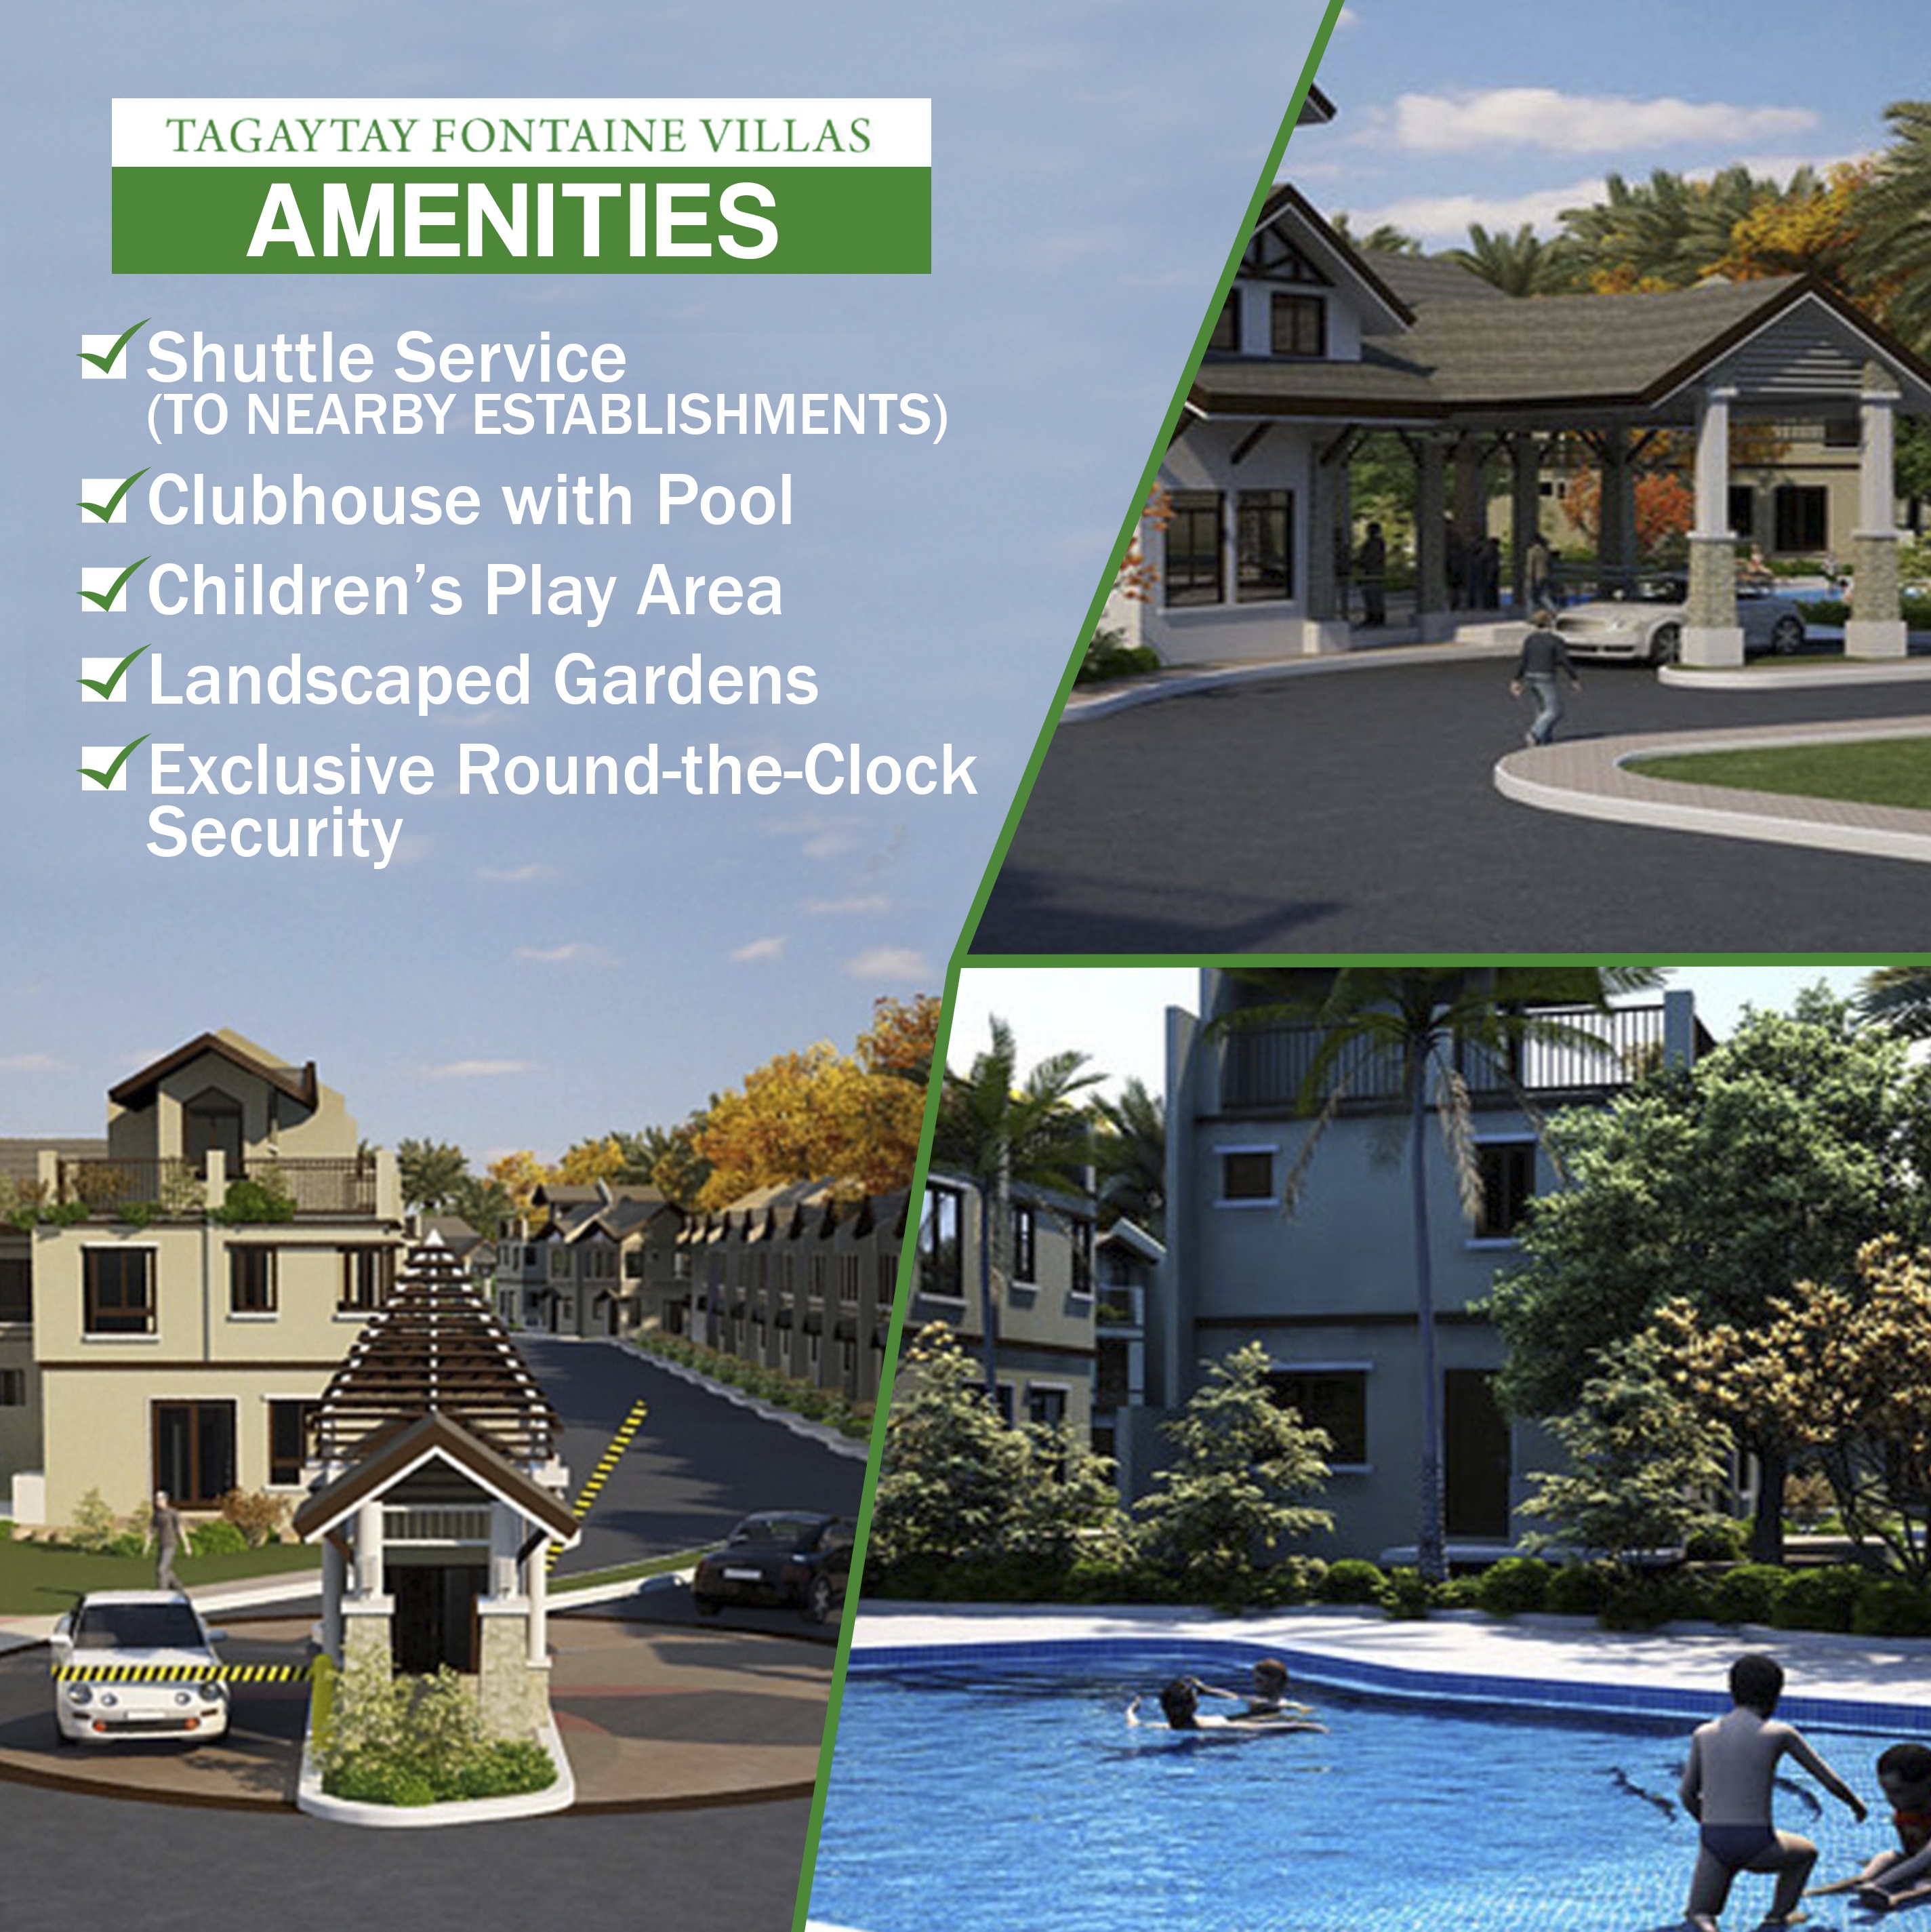 Tagaytay Fontaine Villas list of amenities